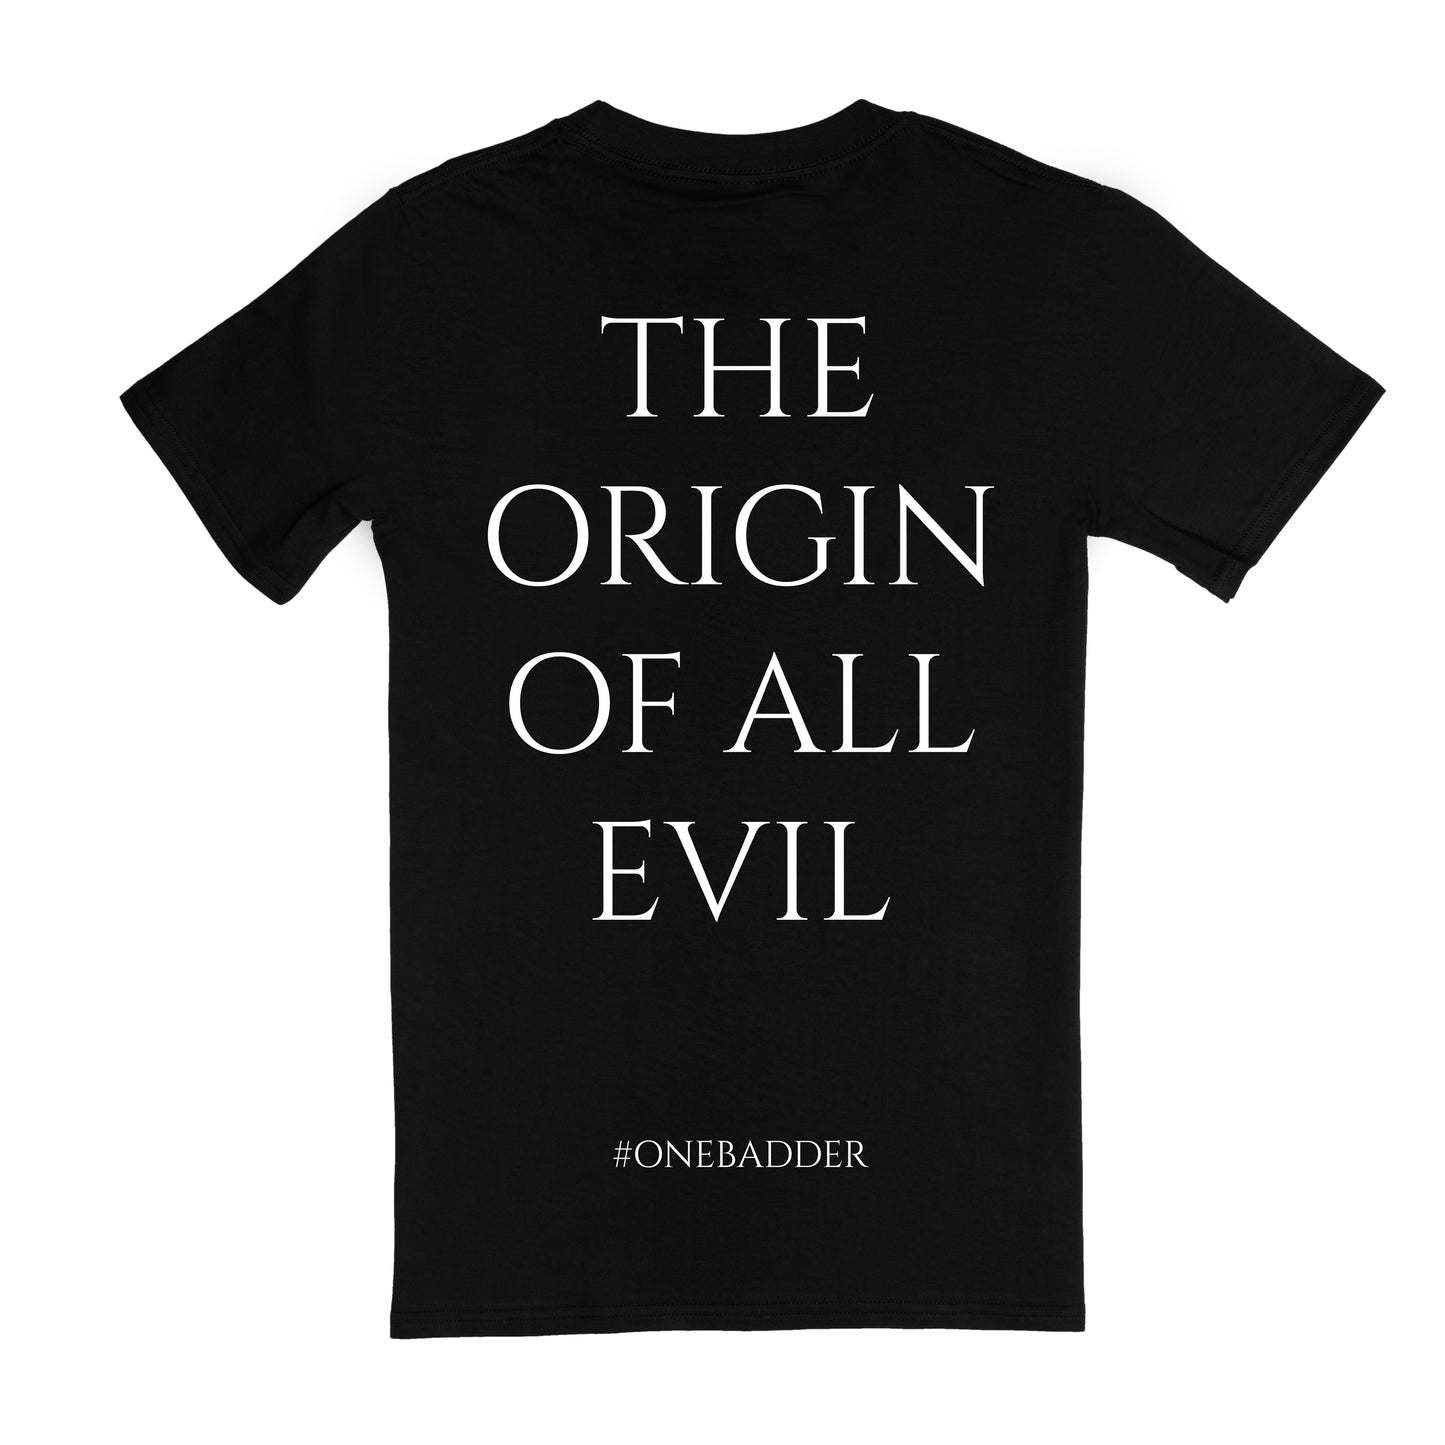 T-shirt "THE ORIGIN OF ALL EVIL"